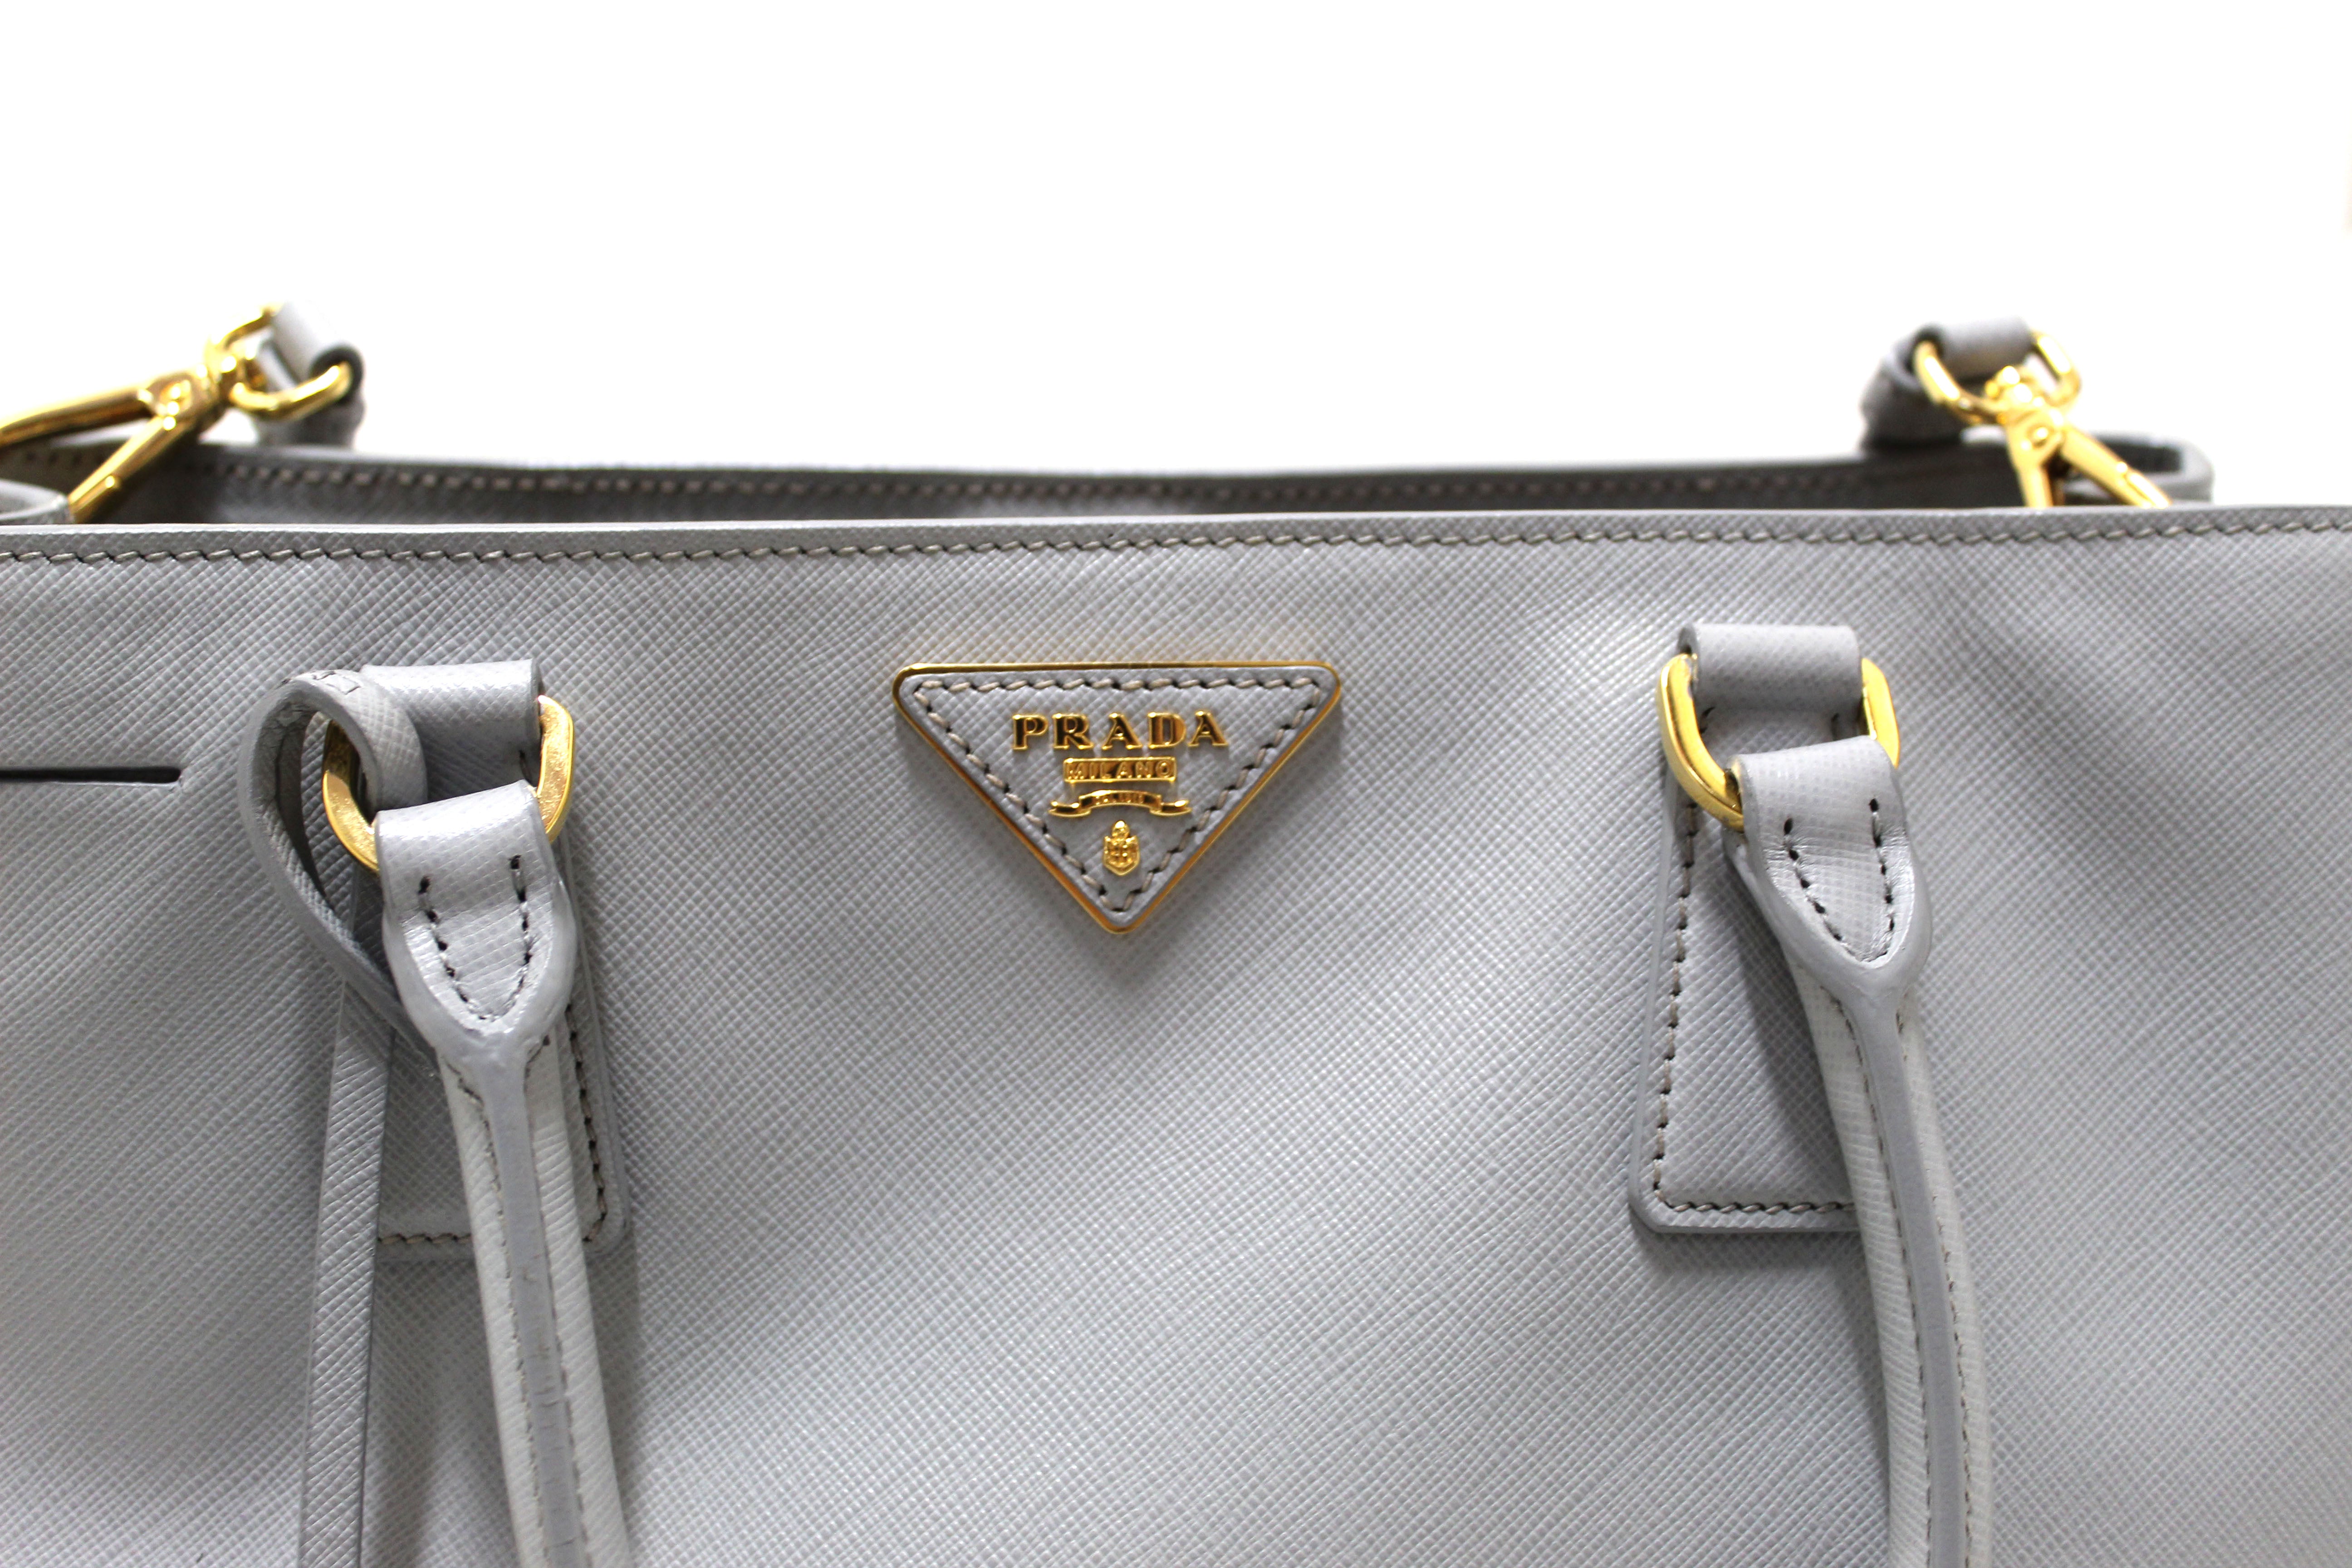 Authentic Prada Grey Saffiano Lux Leather Galleria Large Tote Bag